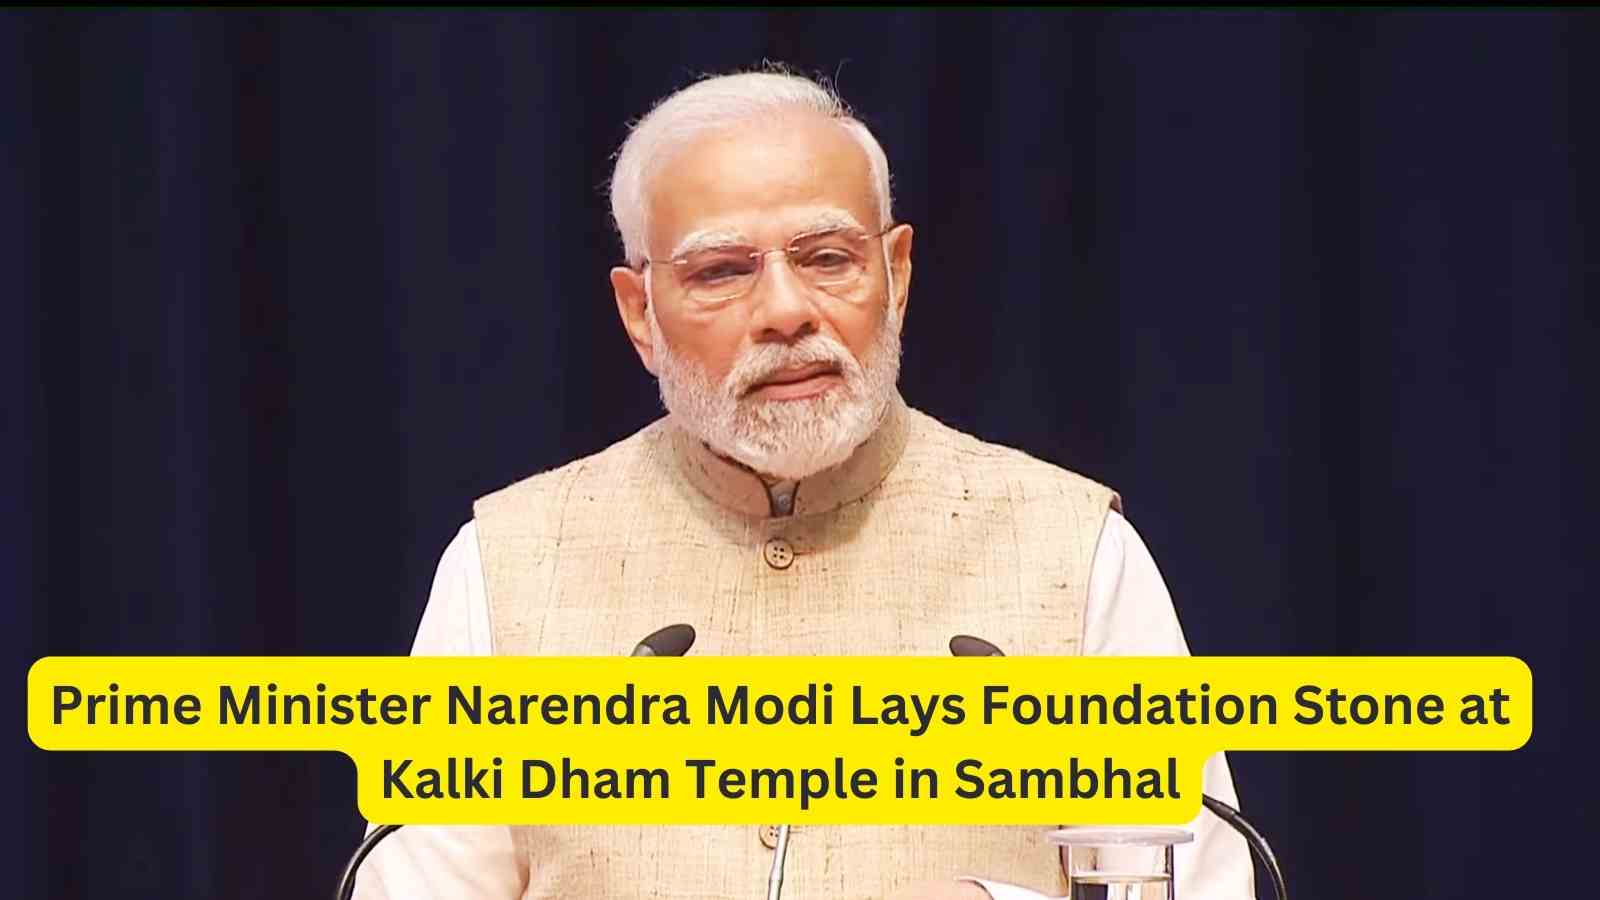 Prime Minister Narendra Modi during the foundation laying ceremony at Kalki Dham Mandir.